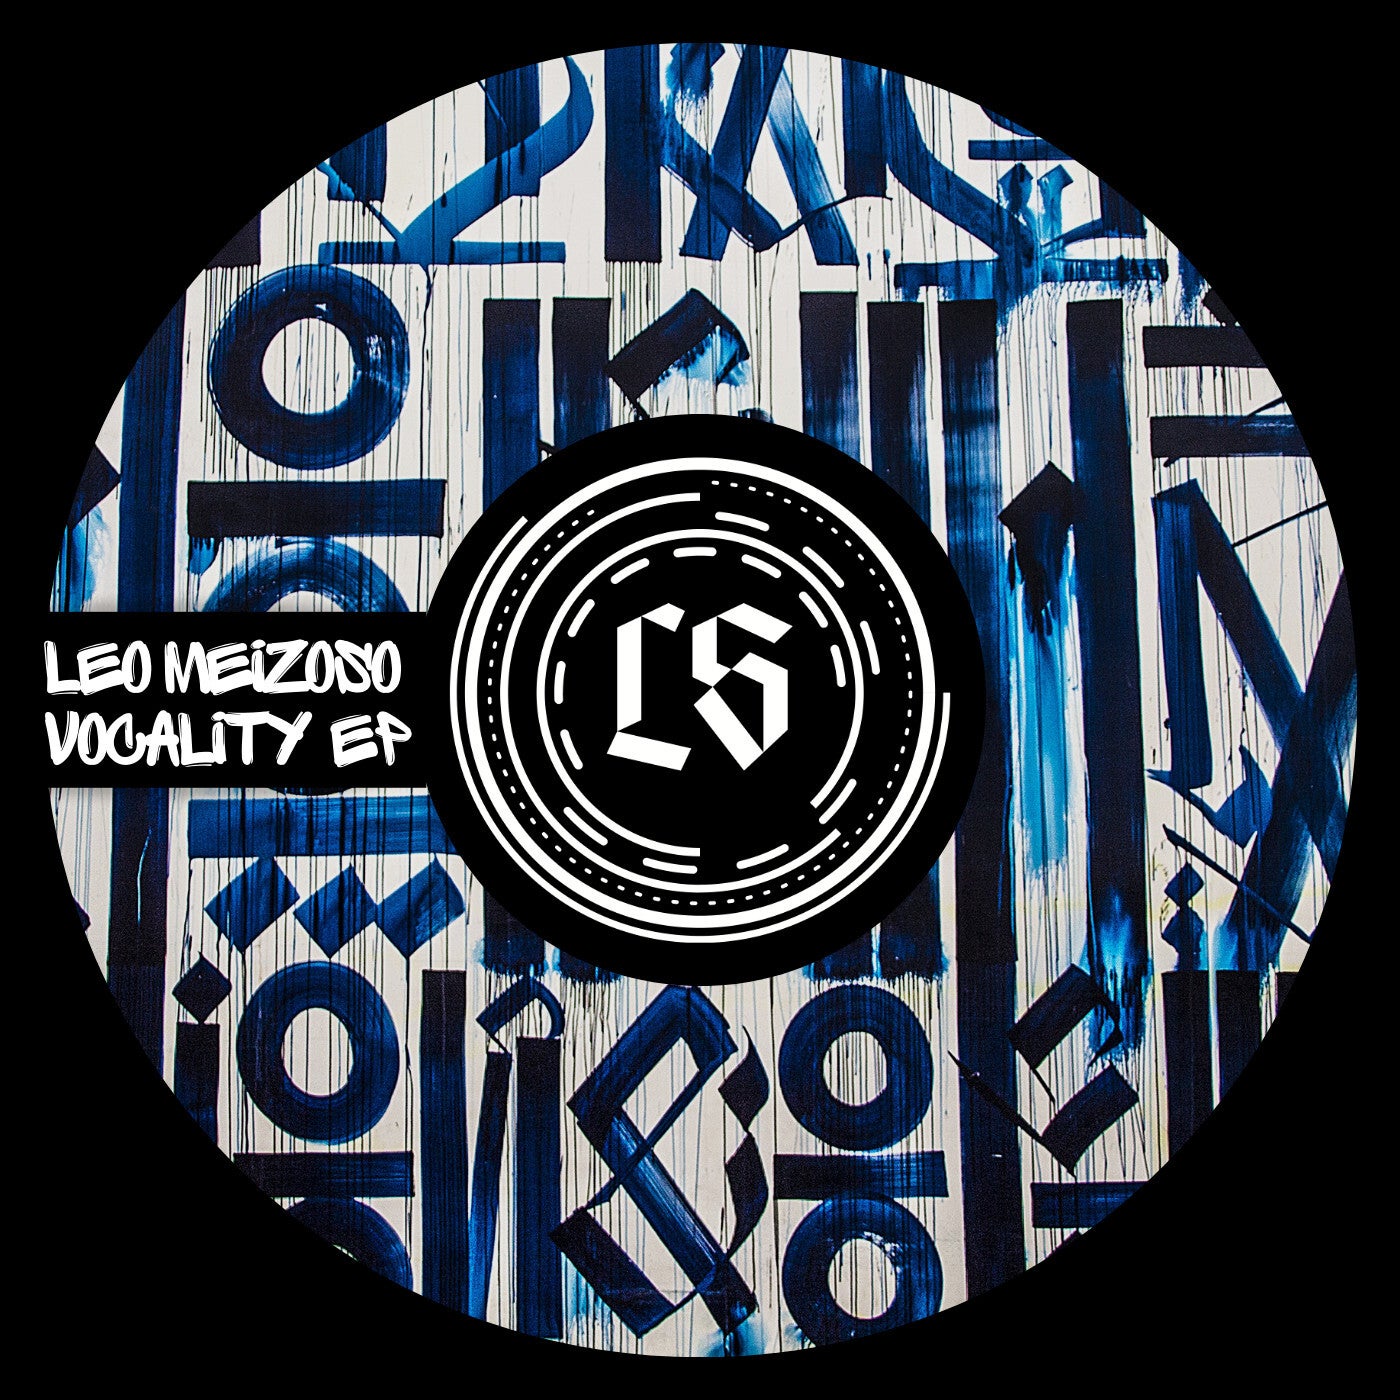 Leo Meizoso – Vocality EP [LST015]